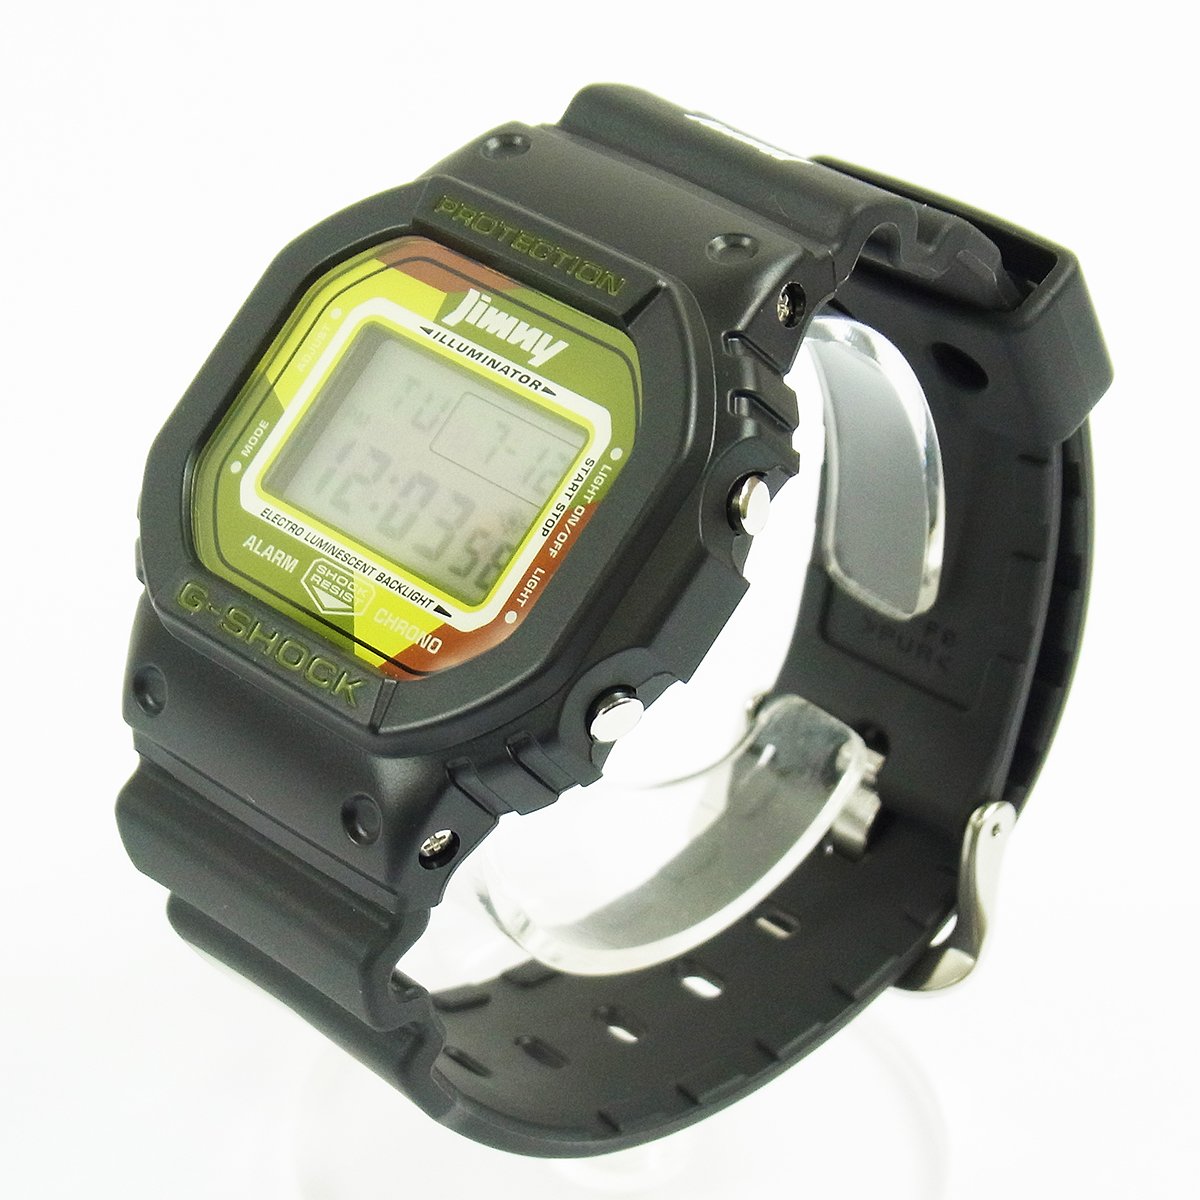 SUZUKI JIMNY×CASIO G-SHOCK DW-5600 コラボ - 腕時計(デジタル)